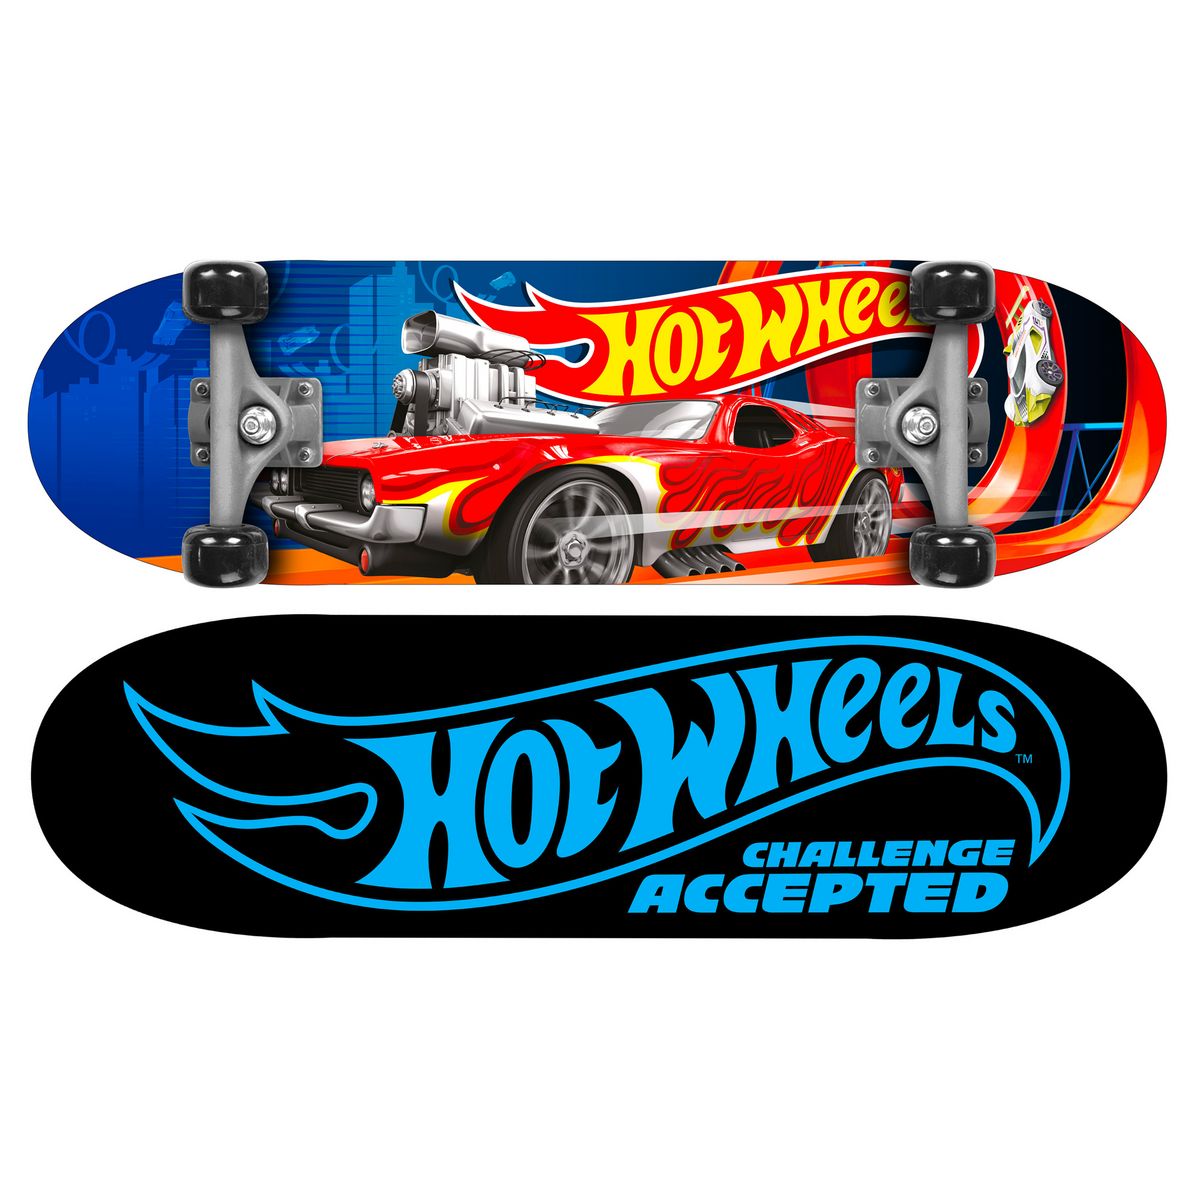 HOT WHEELS Skateboard - Hot Wheels pas cher 